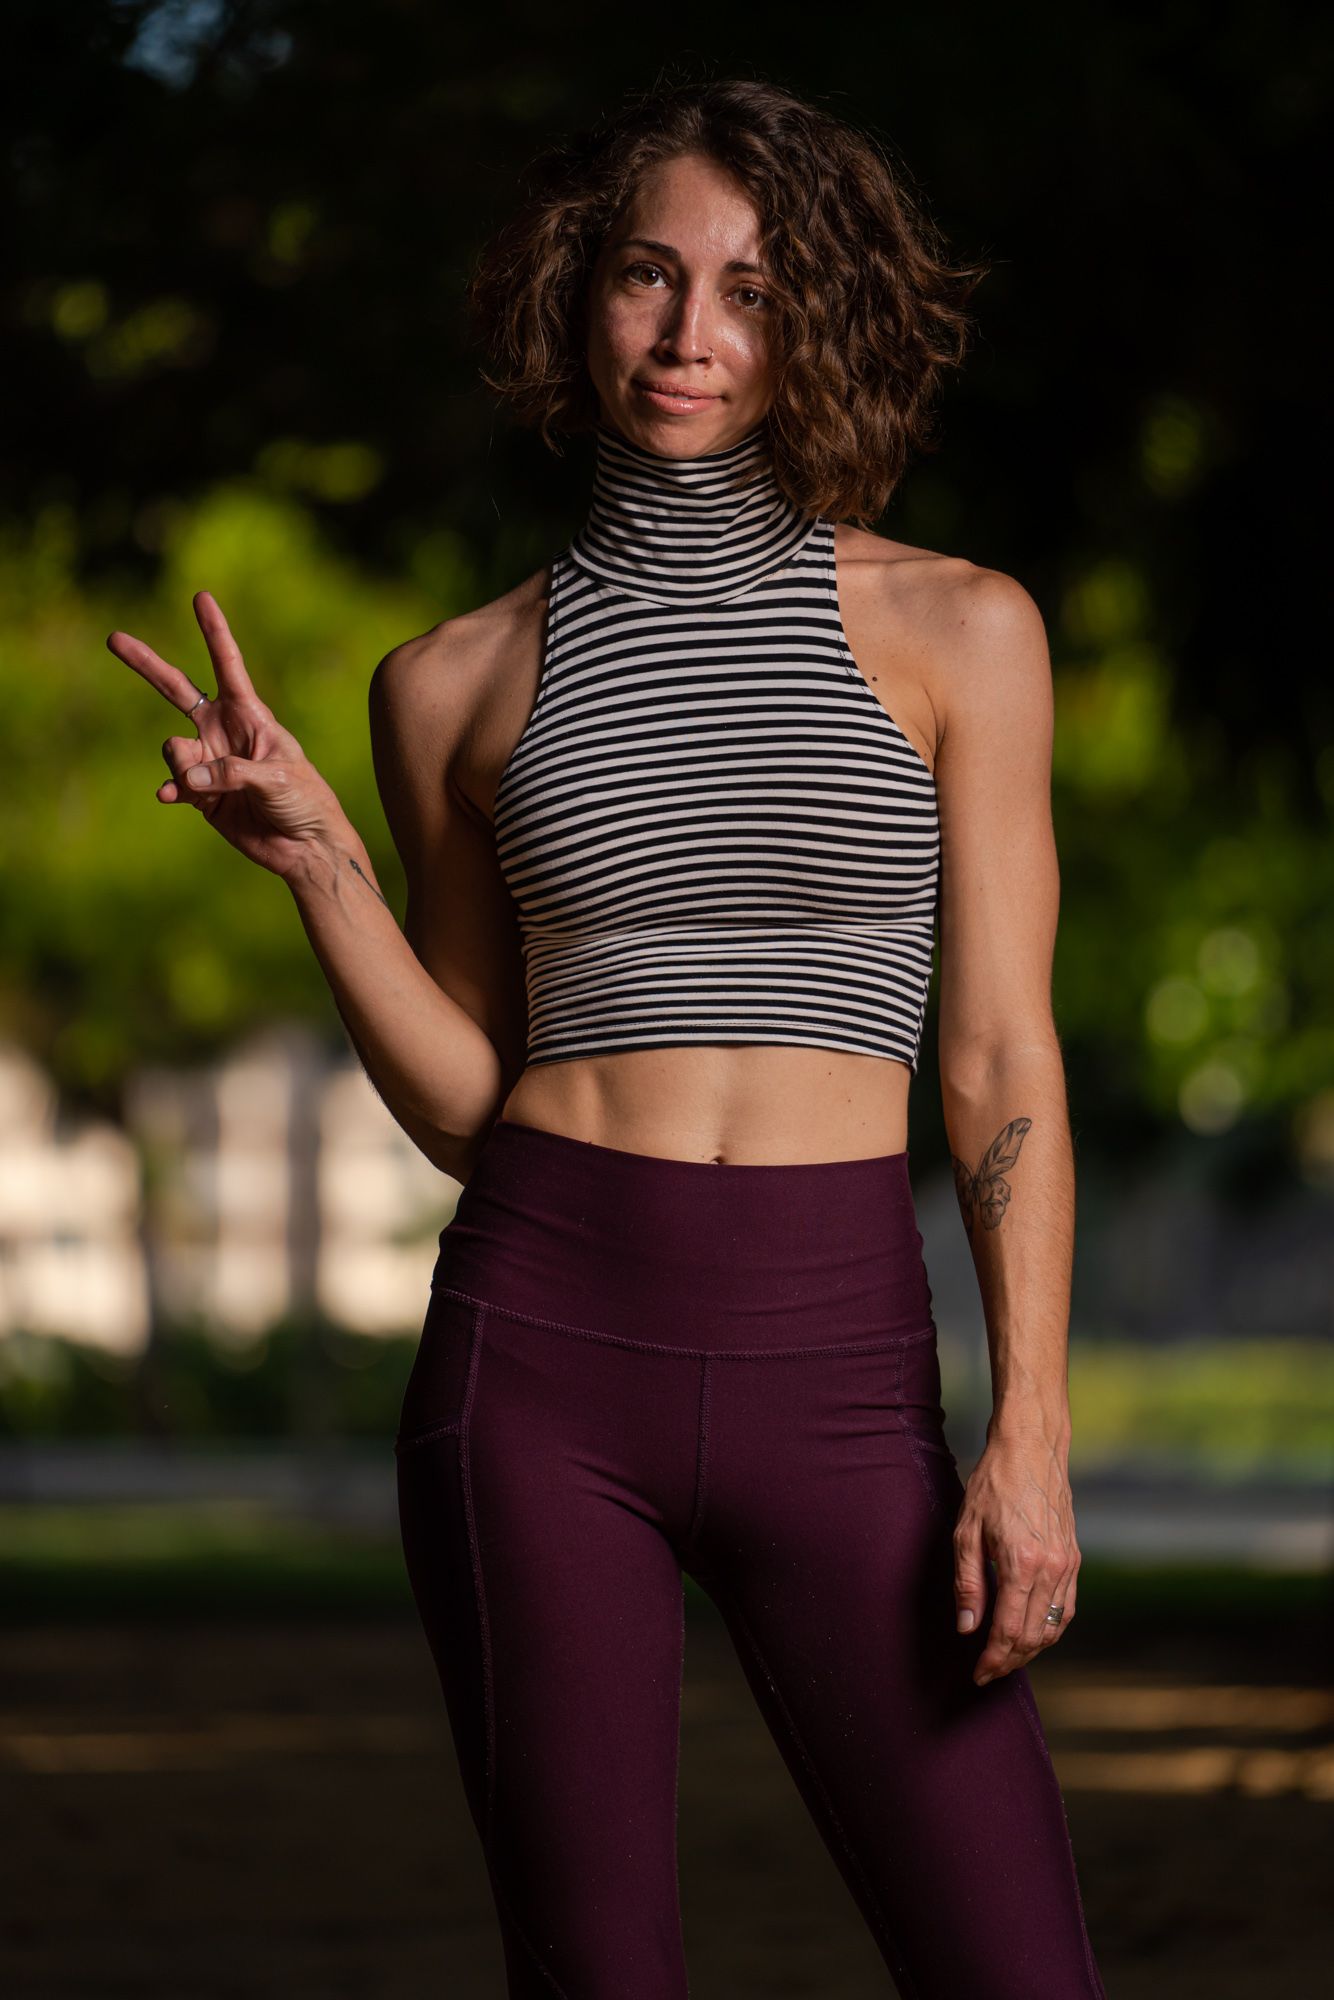 Yoga Teacher and therapist, Maya Weber Hipskind